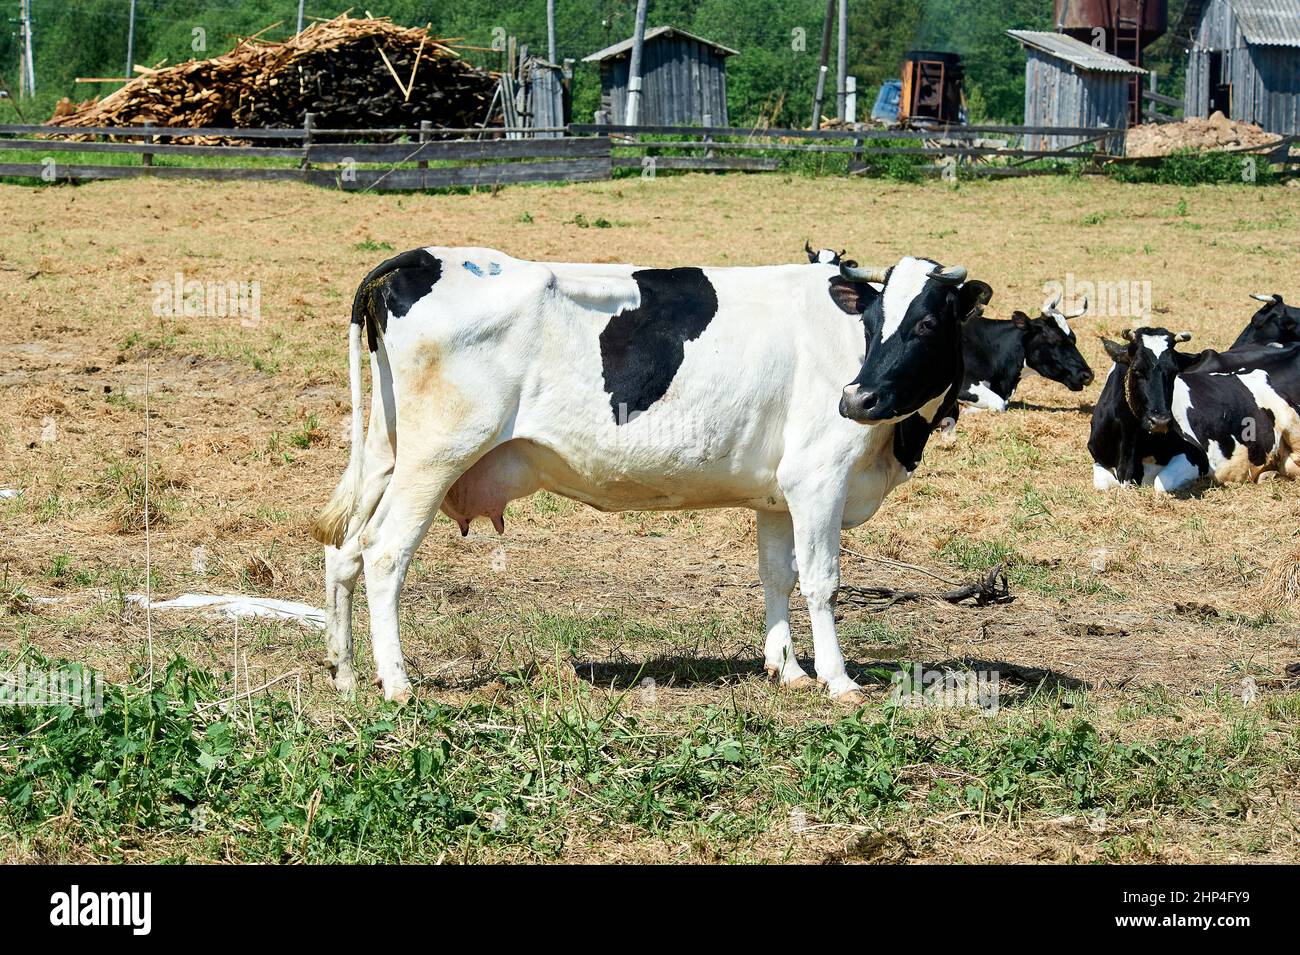 una mucca si trova in una penna su una fattoria, kholmogorskaya razza. Foto di alta qualità Foto Stock